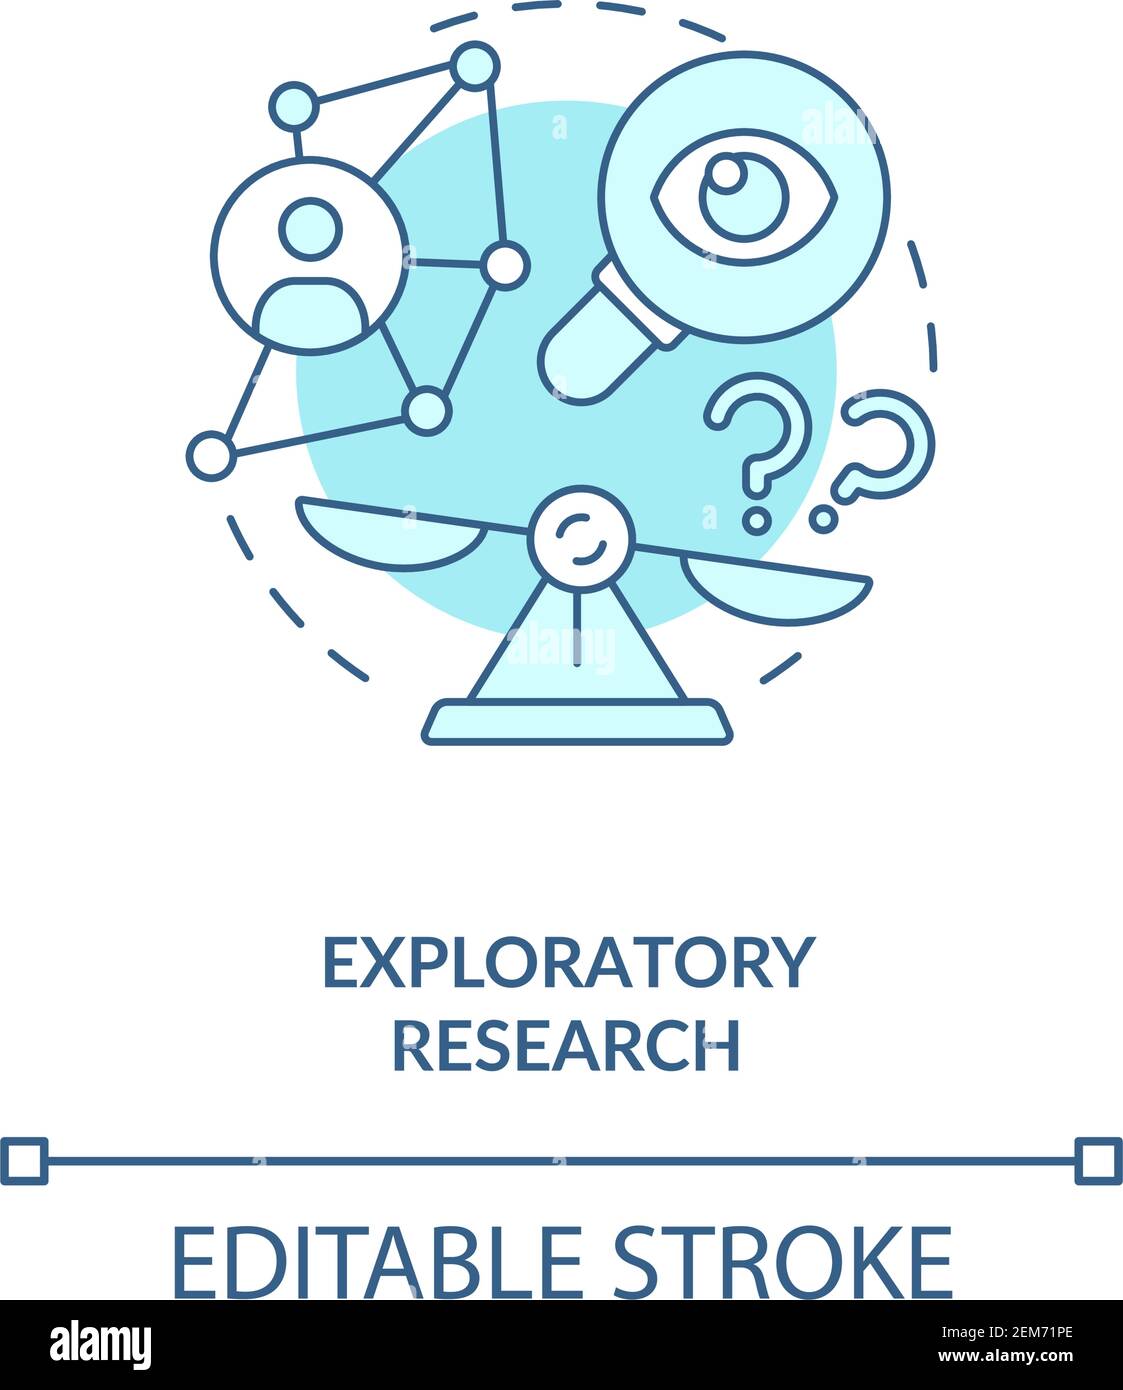 Exploratory research concept icon Stock Vector